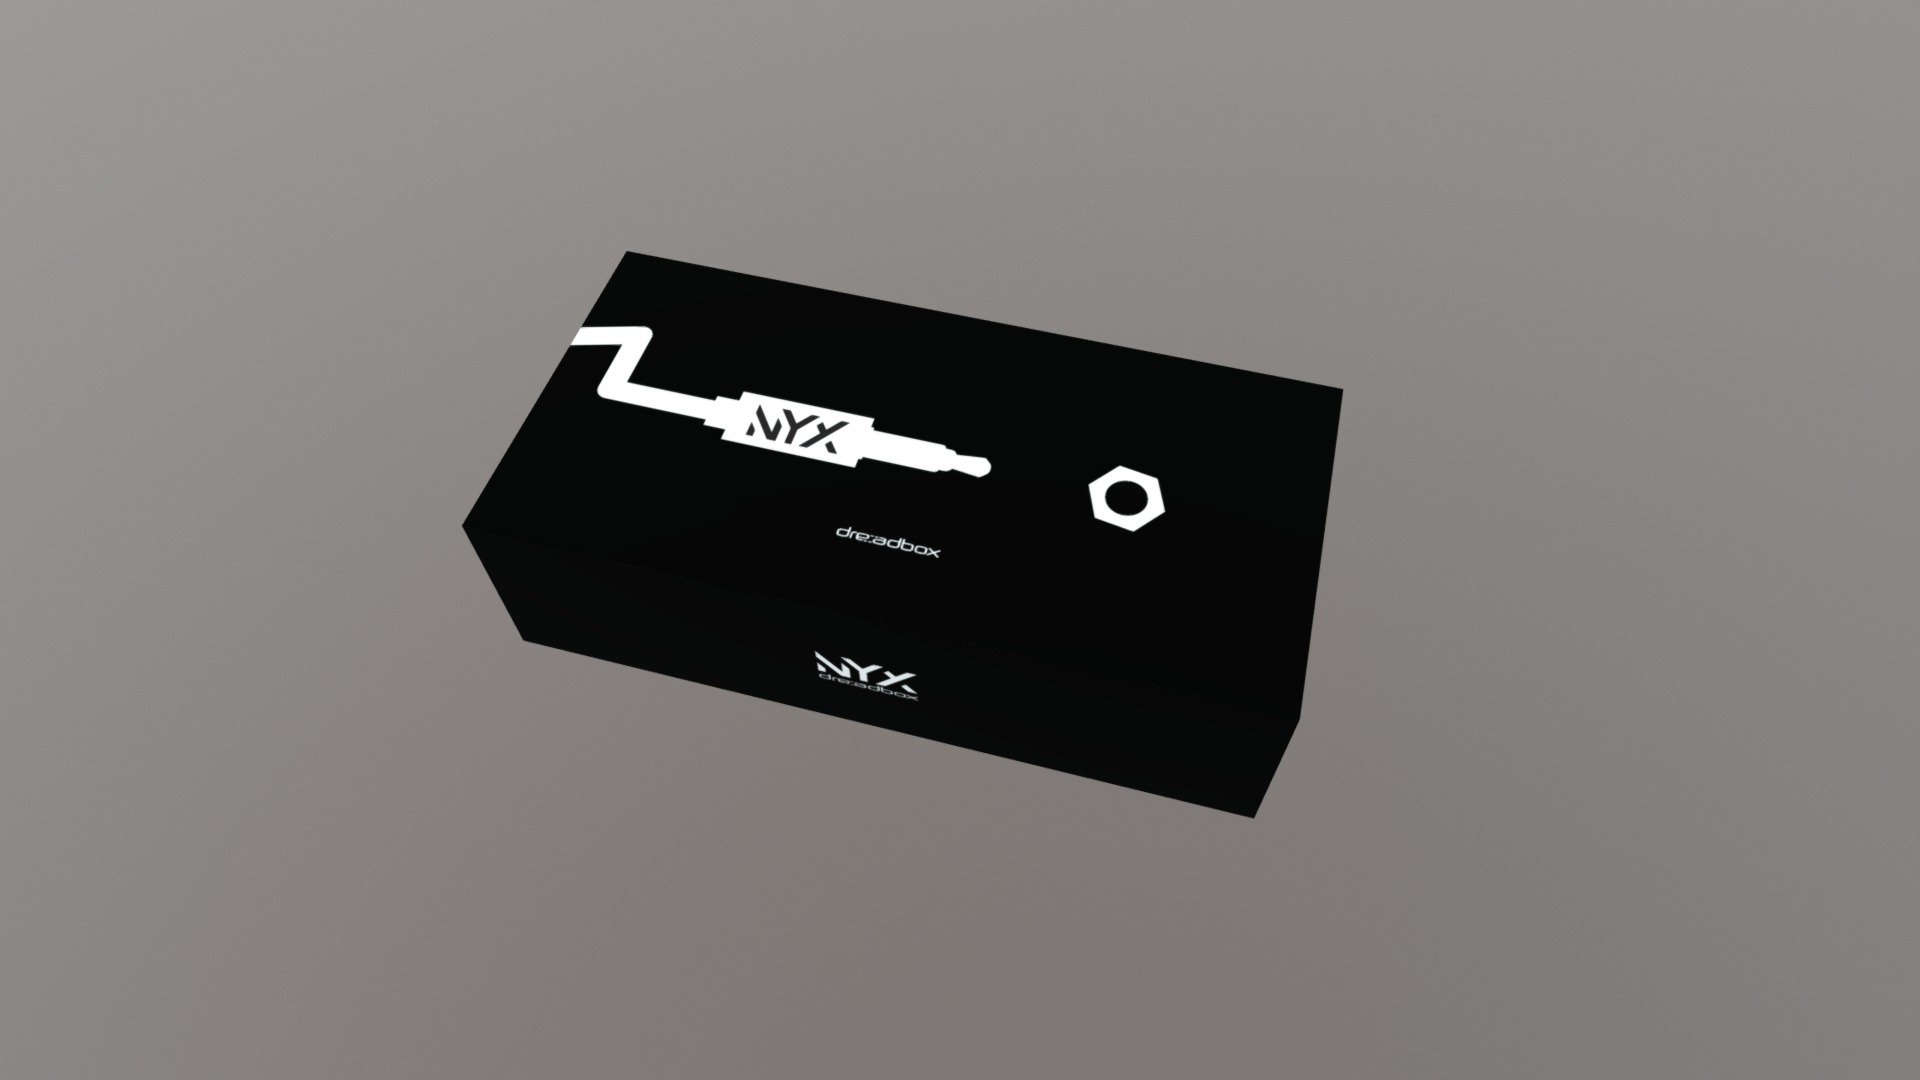 Dreadbox Nyx packaging concept